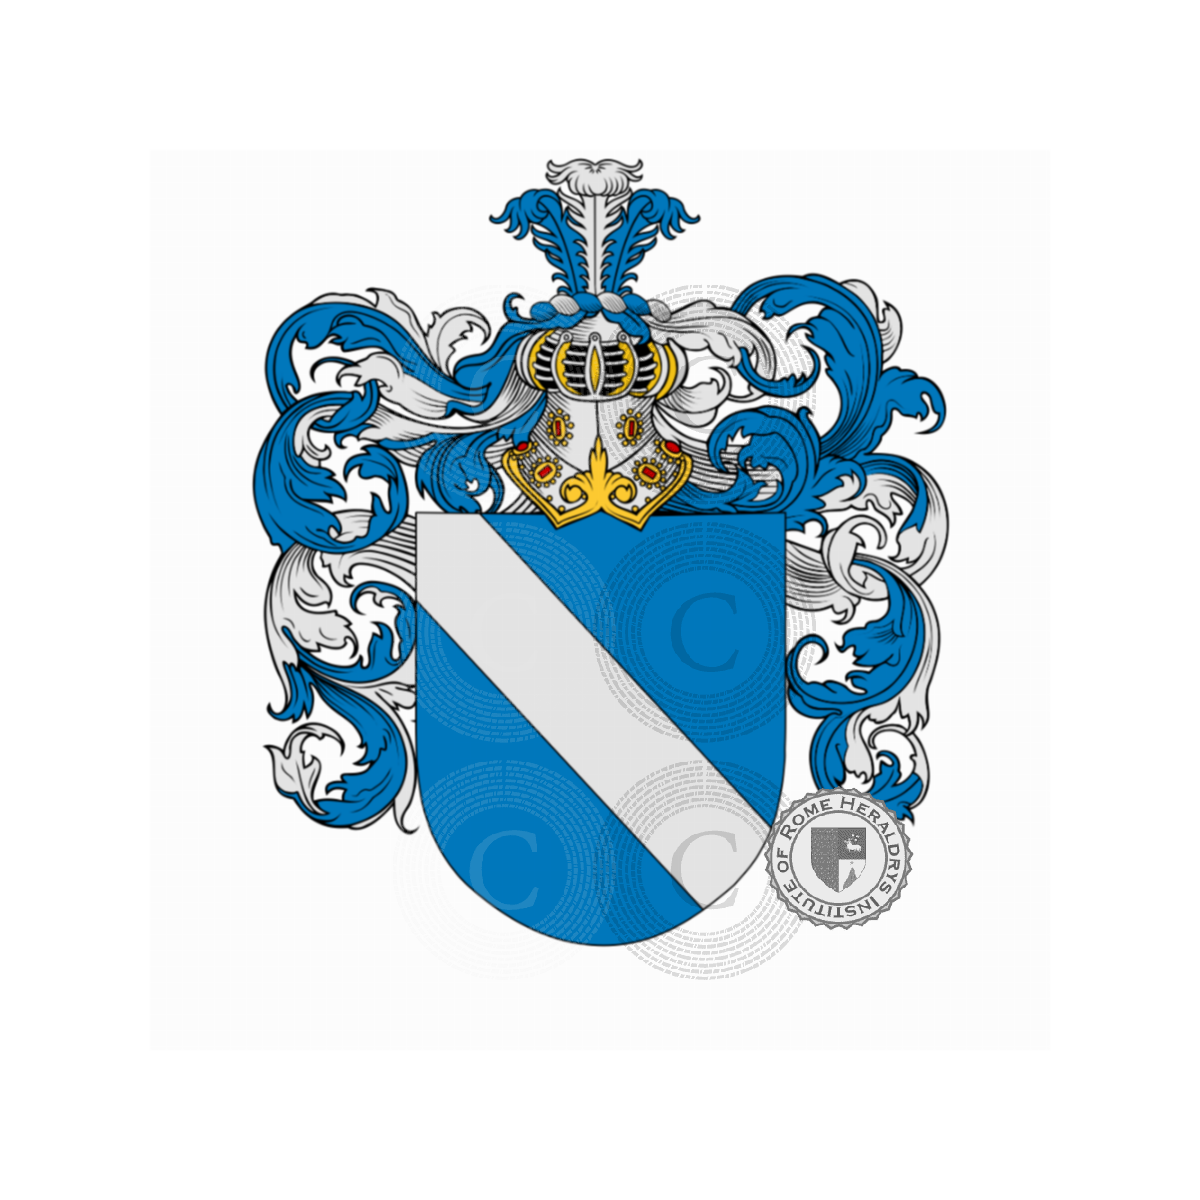 Coat of arms of familySanto Mauro, SantoMauro